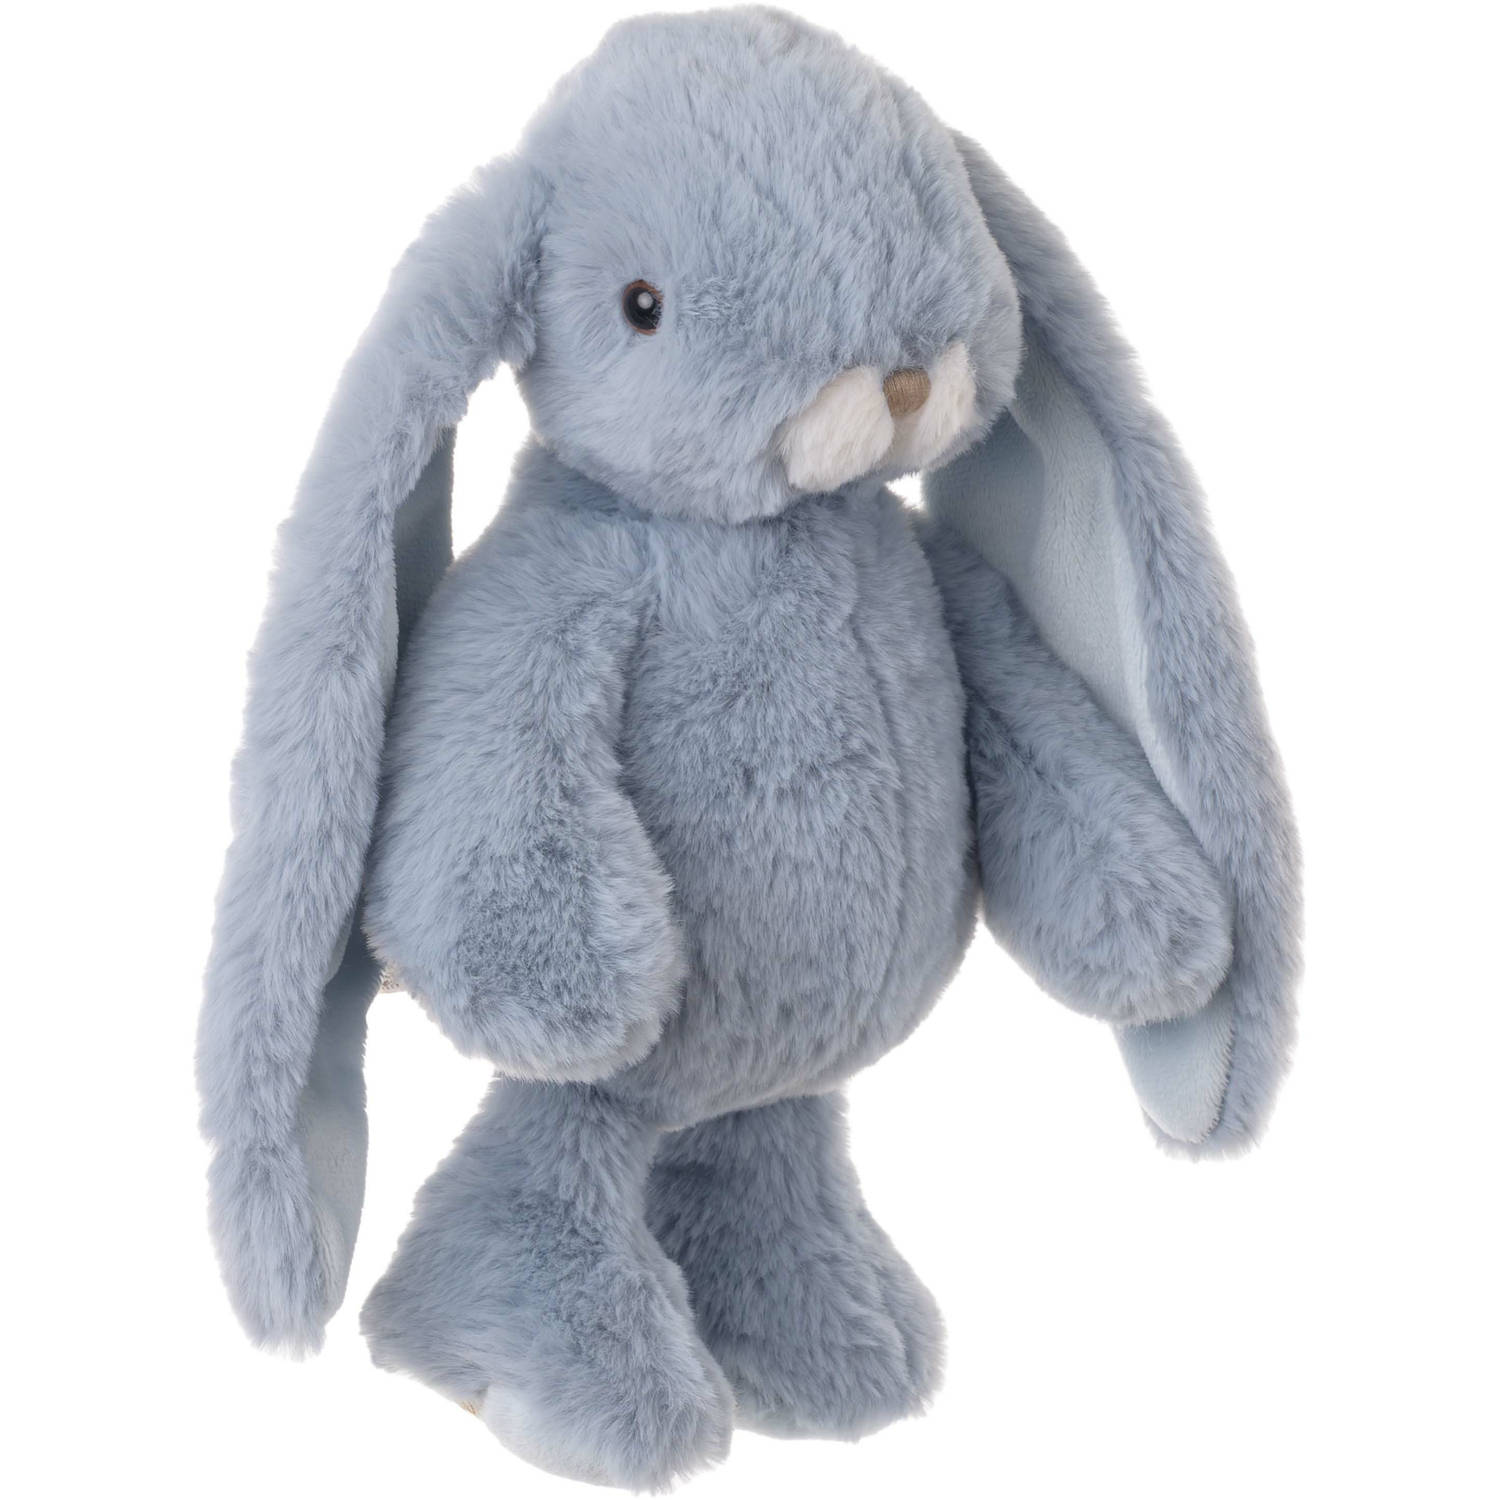 Bukowski pluche konijn knuffeldier - lichtblauw - staand - 30 cm - Luxe kwaliteit knuffels